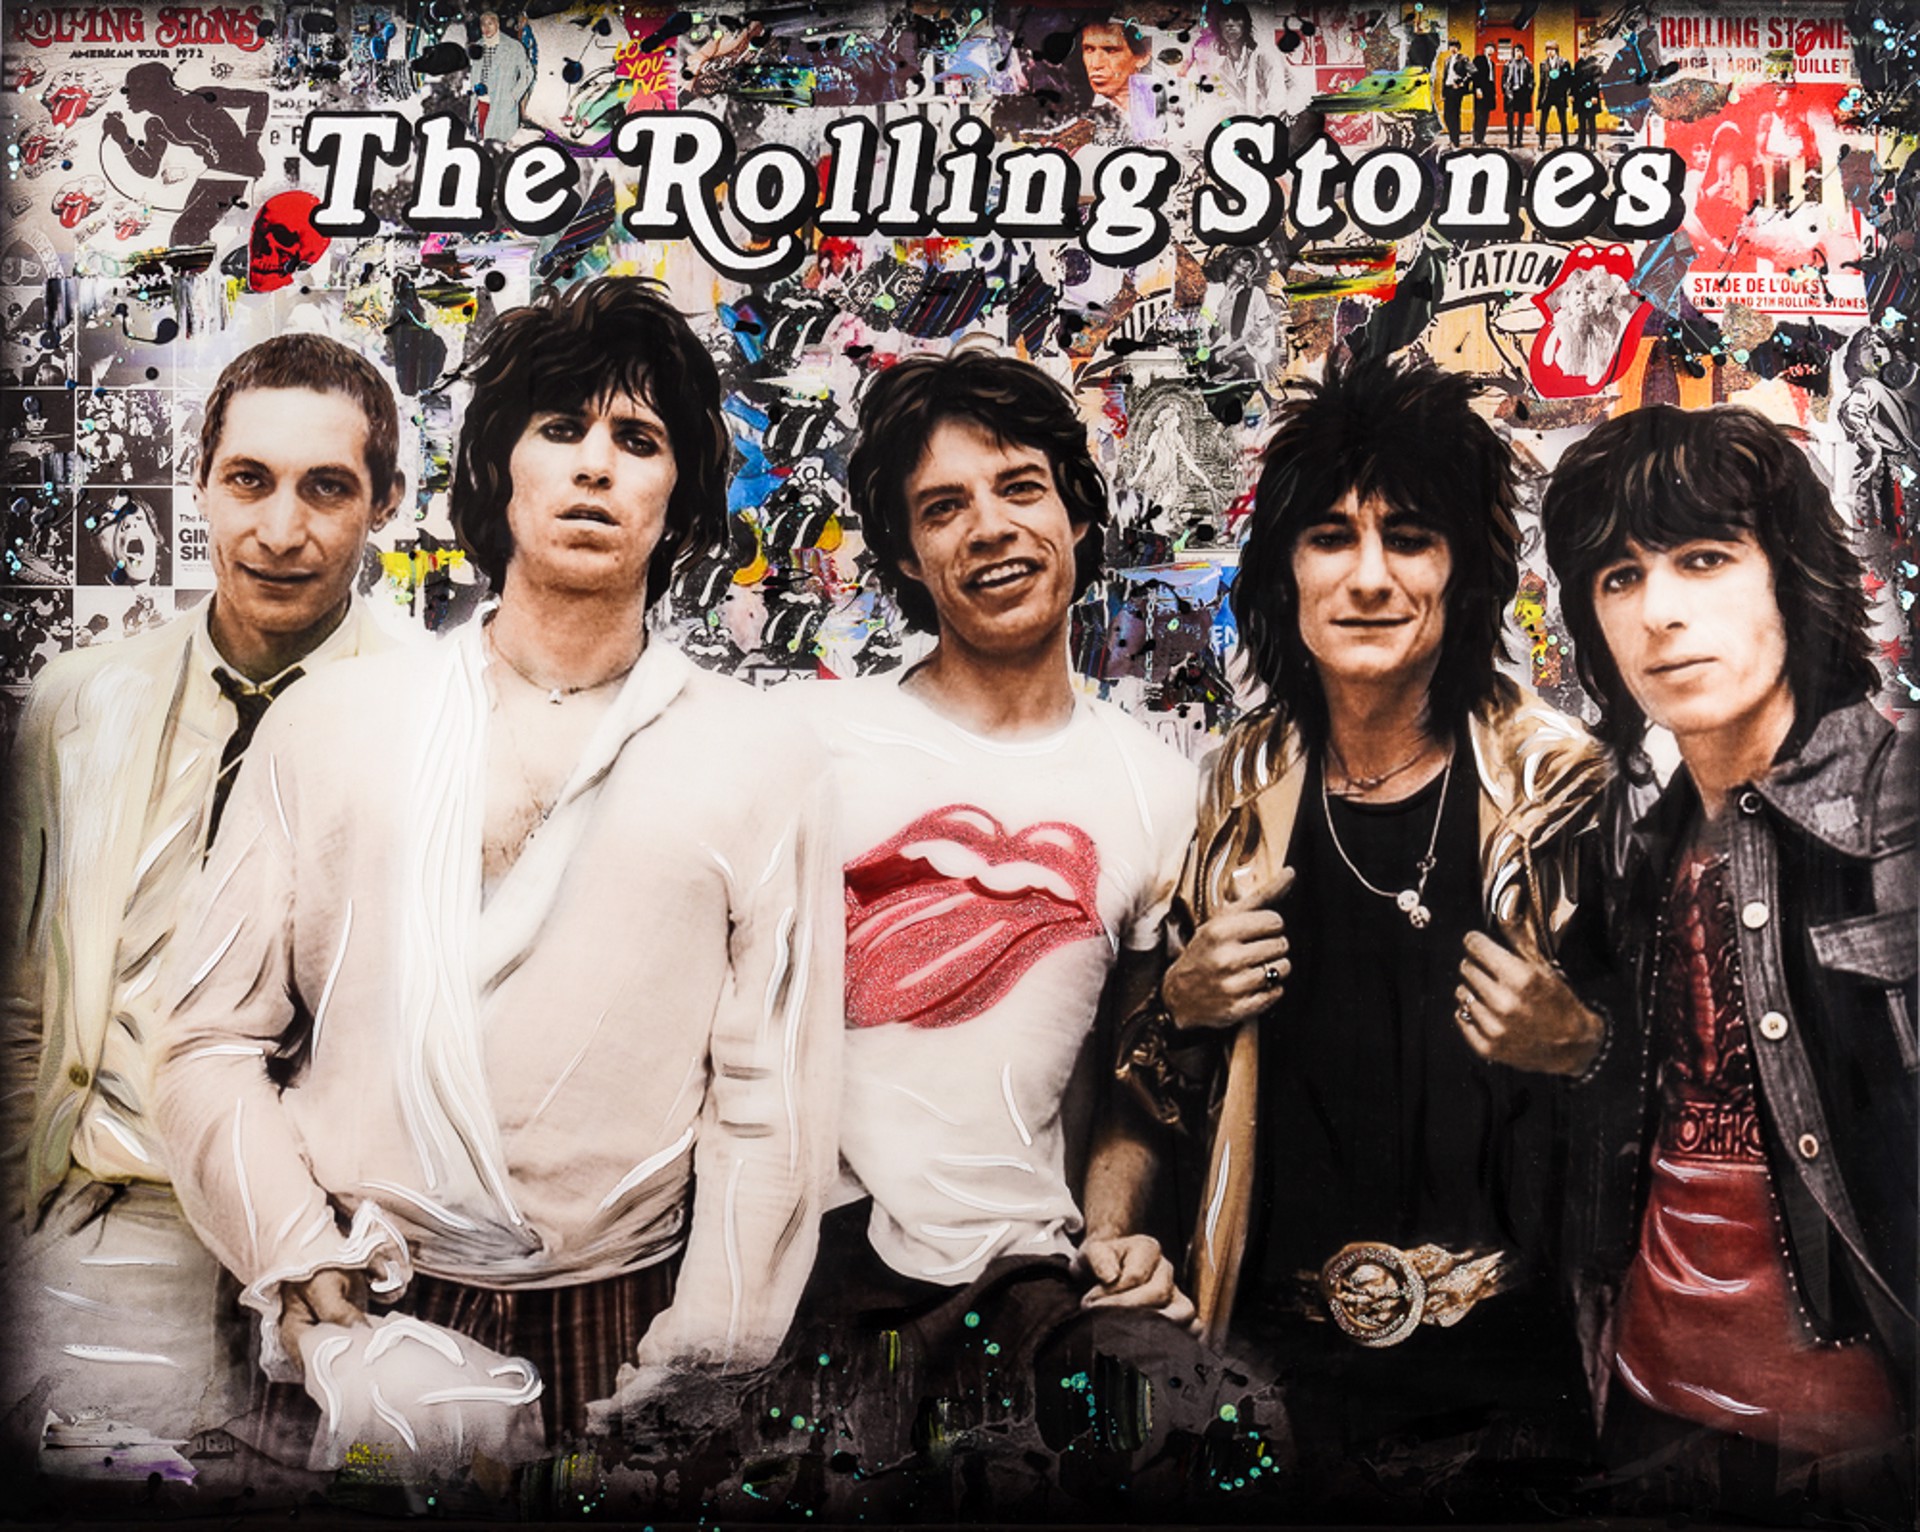 The Rolling Stones by DeVon